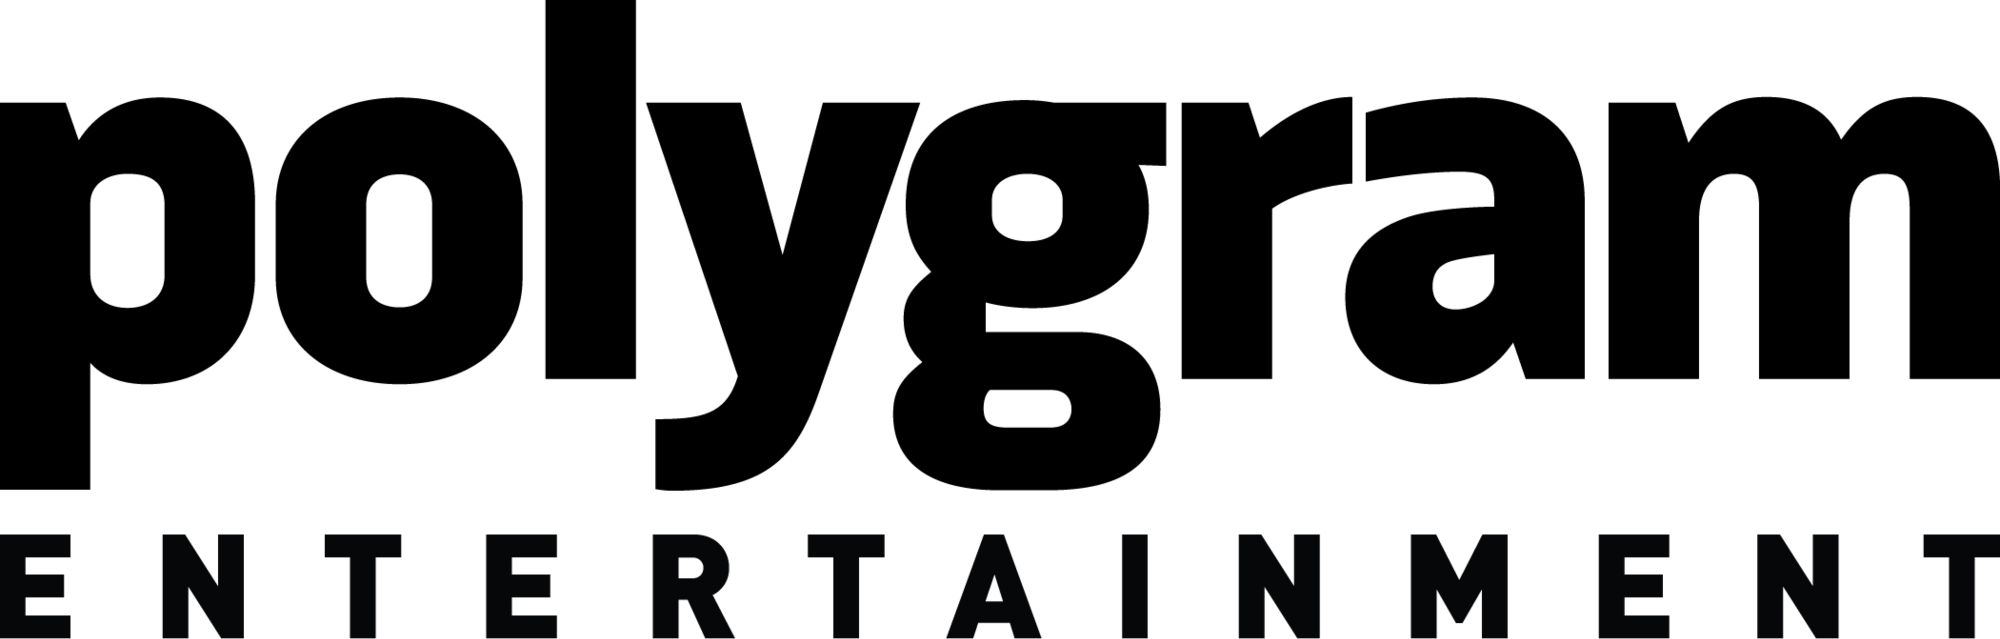 Polygram Entertainment Logo